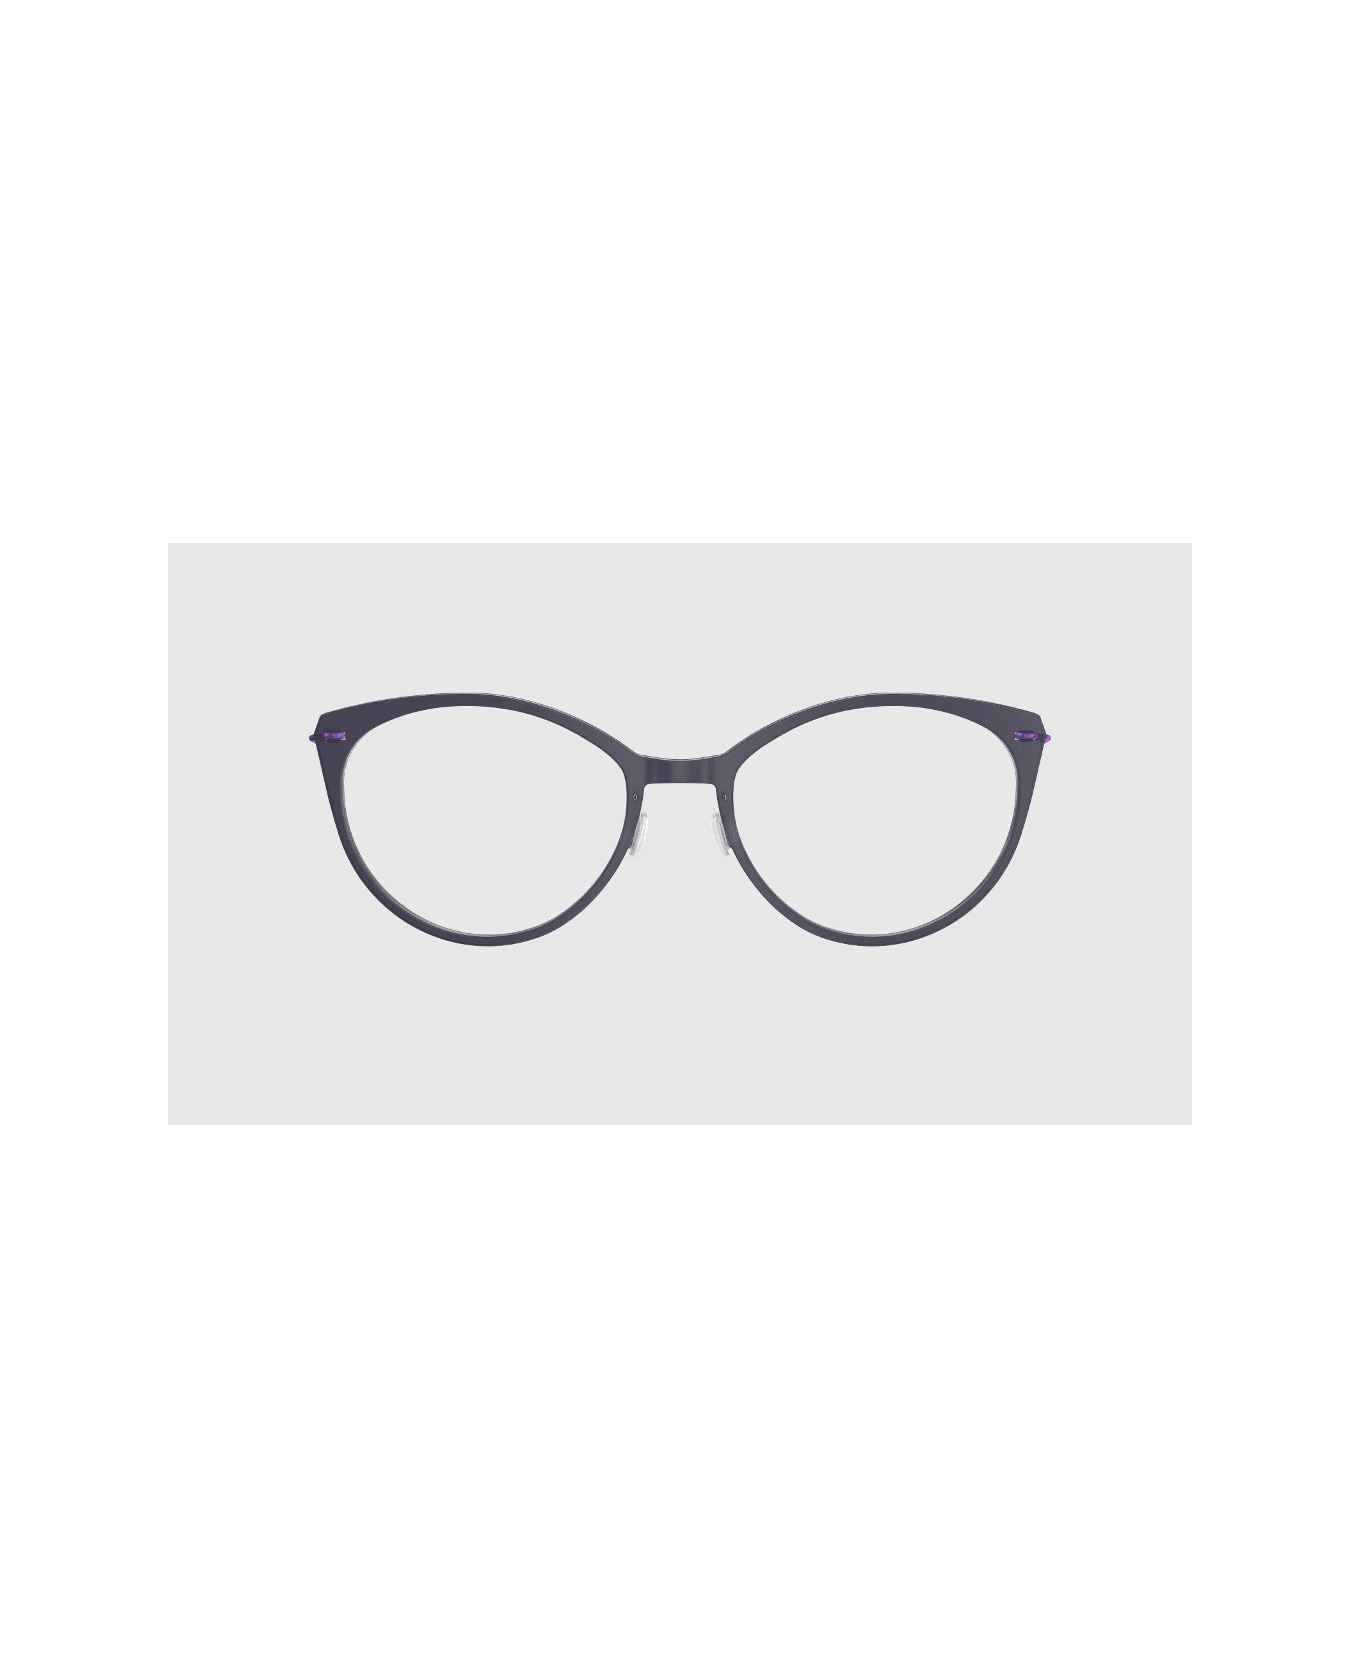 LINDBERG Now 6564 CM77 Glasses